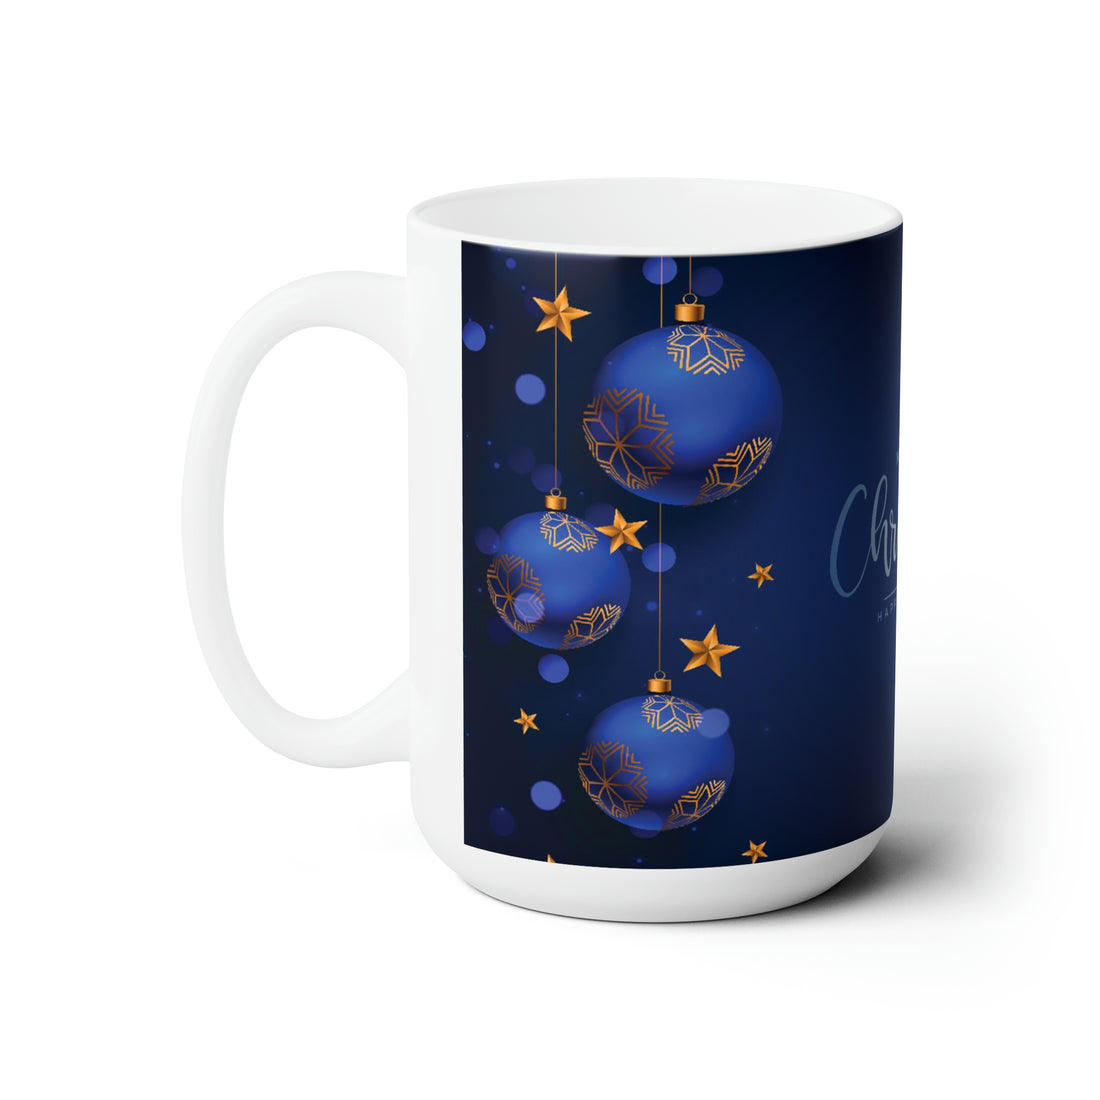 15oz Christmas Ceramic Mug, 15oz, Multi Colors